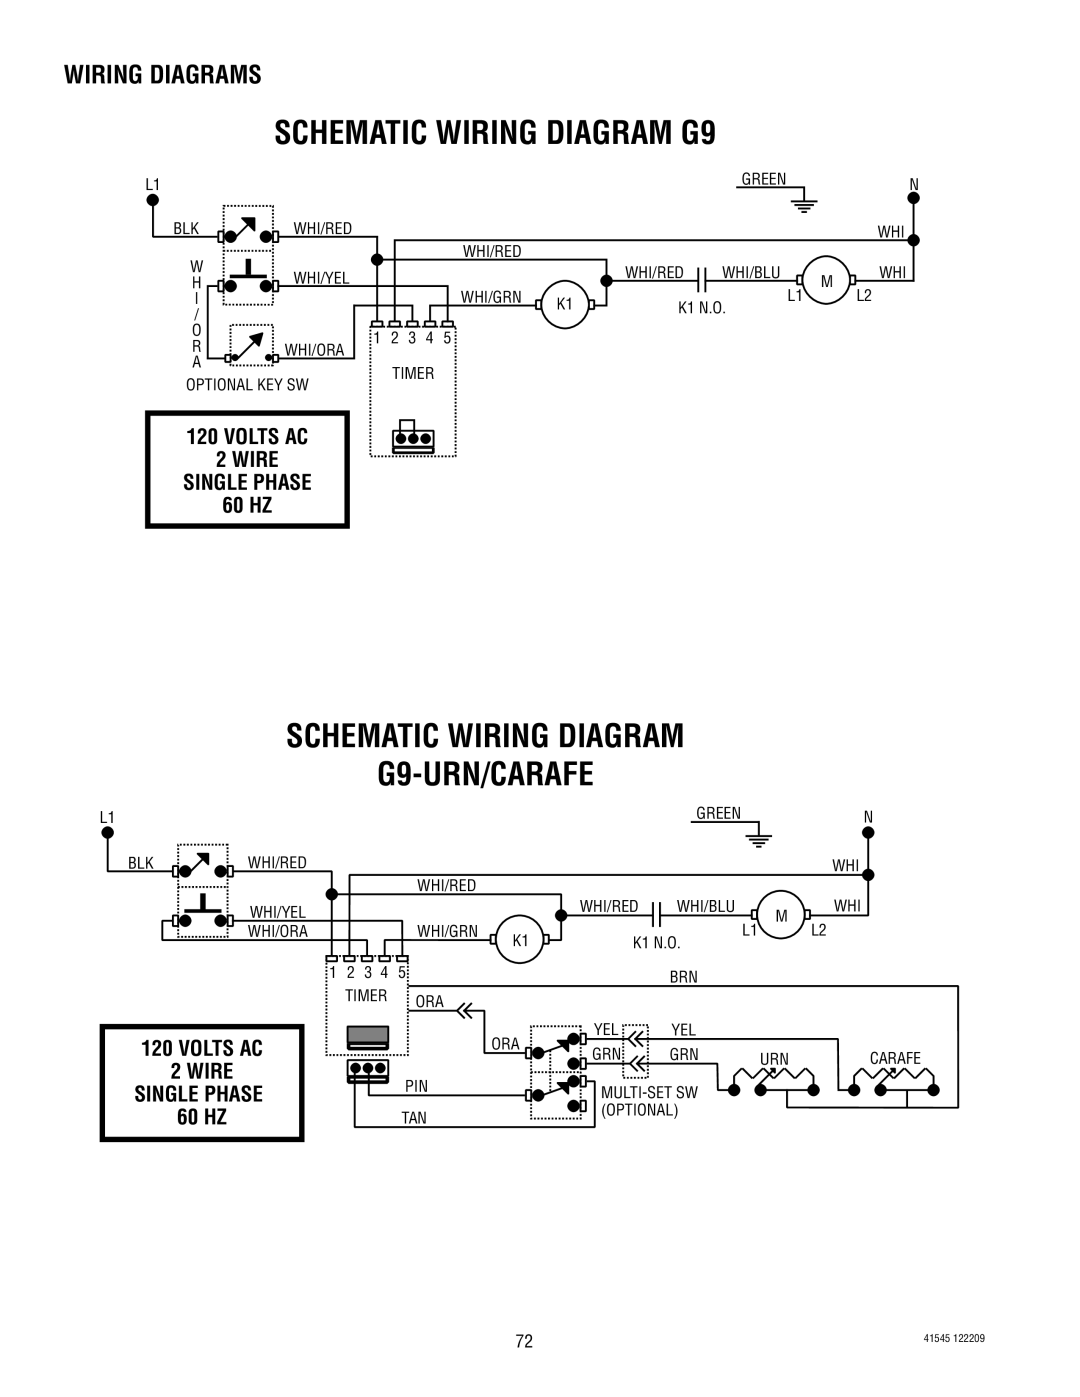 Bunn G9WD SCHEMATIC WIRING DIAGRAM G9-URN/CARAFE, VOLTS AC 2 WIRE SINGLE PHASE 60 HZ, Volts Ac, Wire, Single Phase 